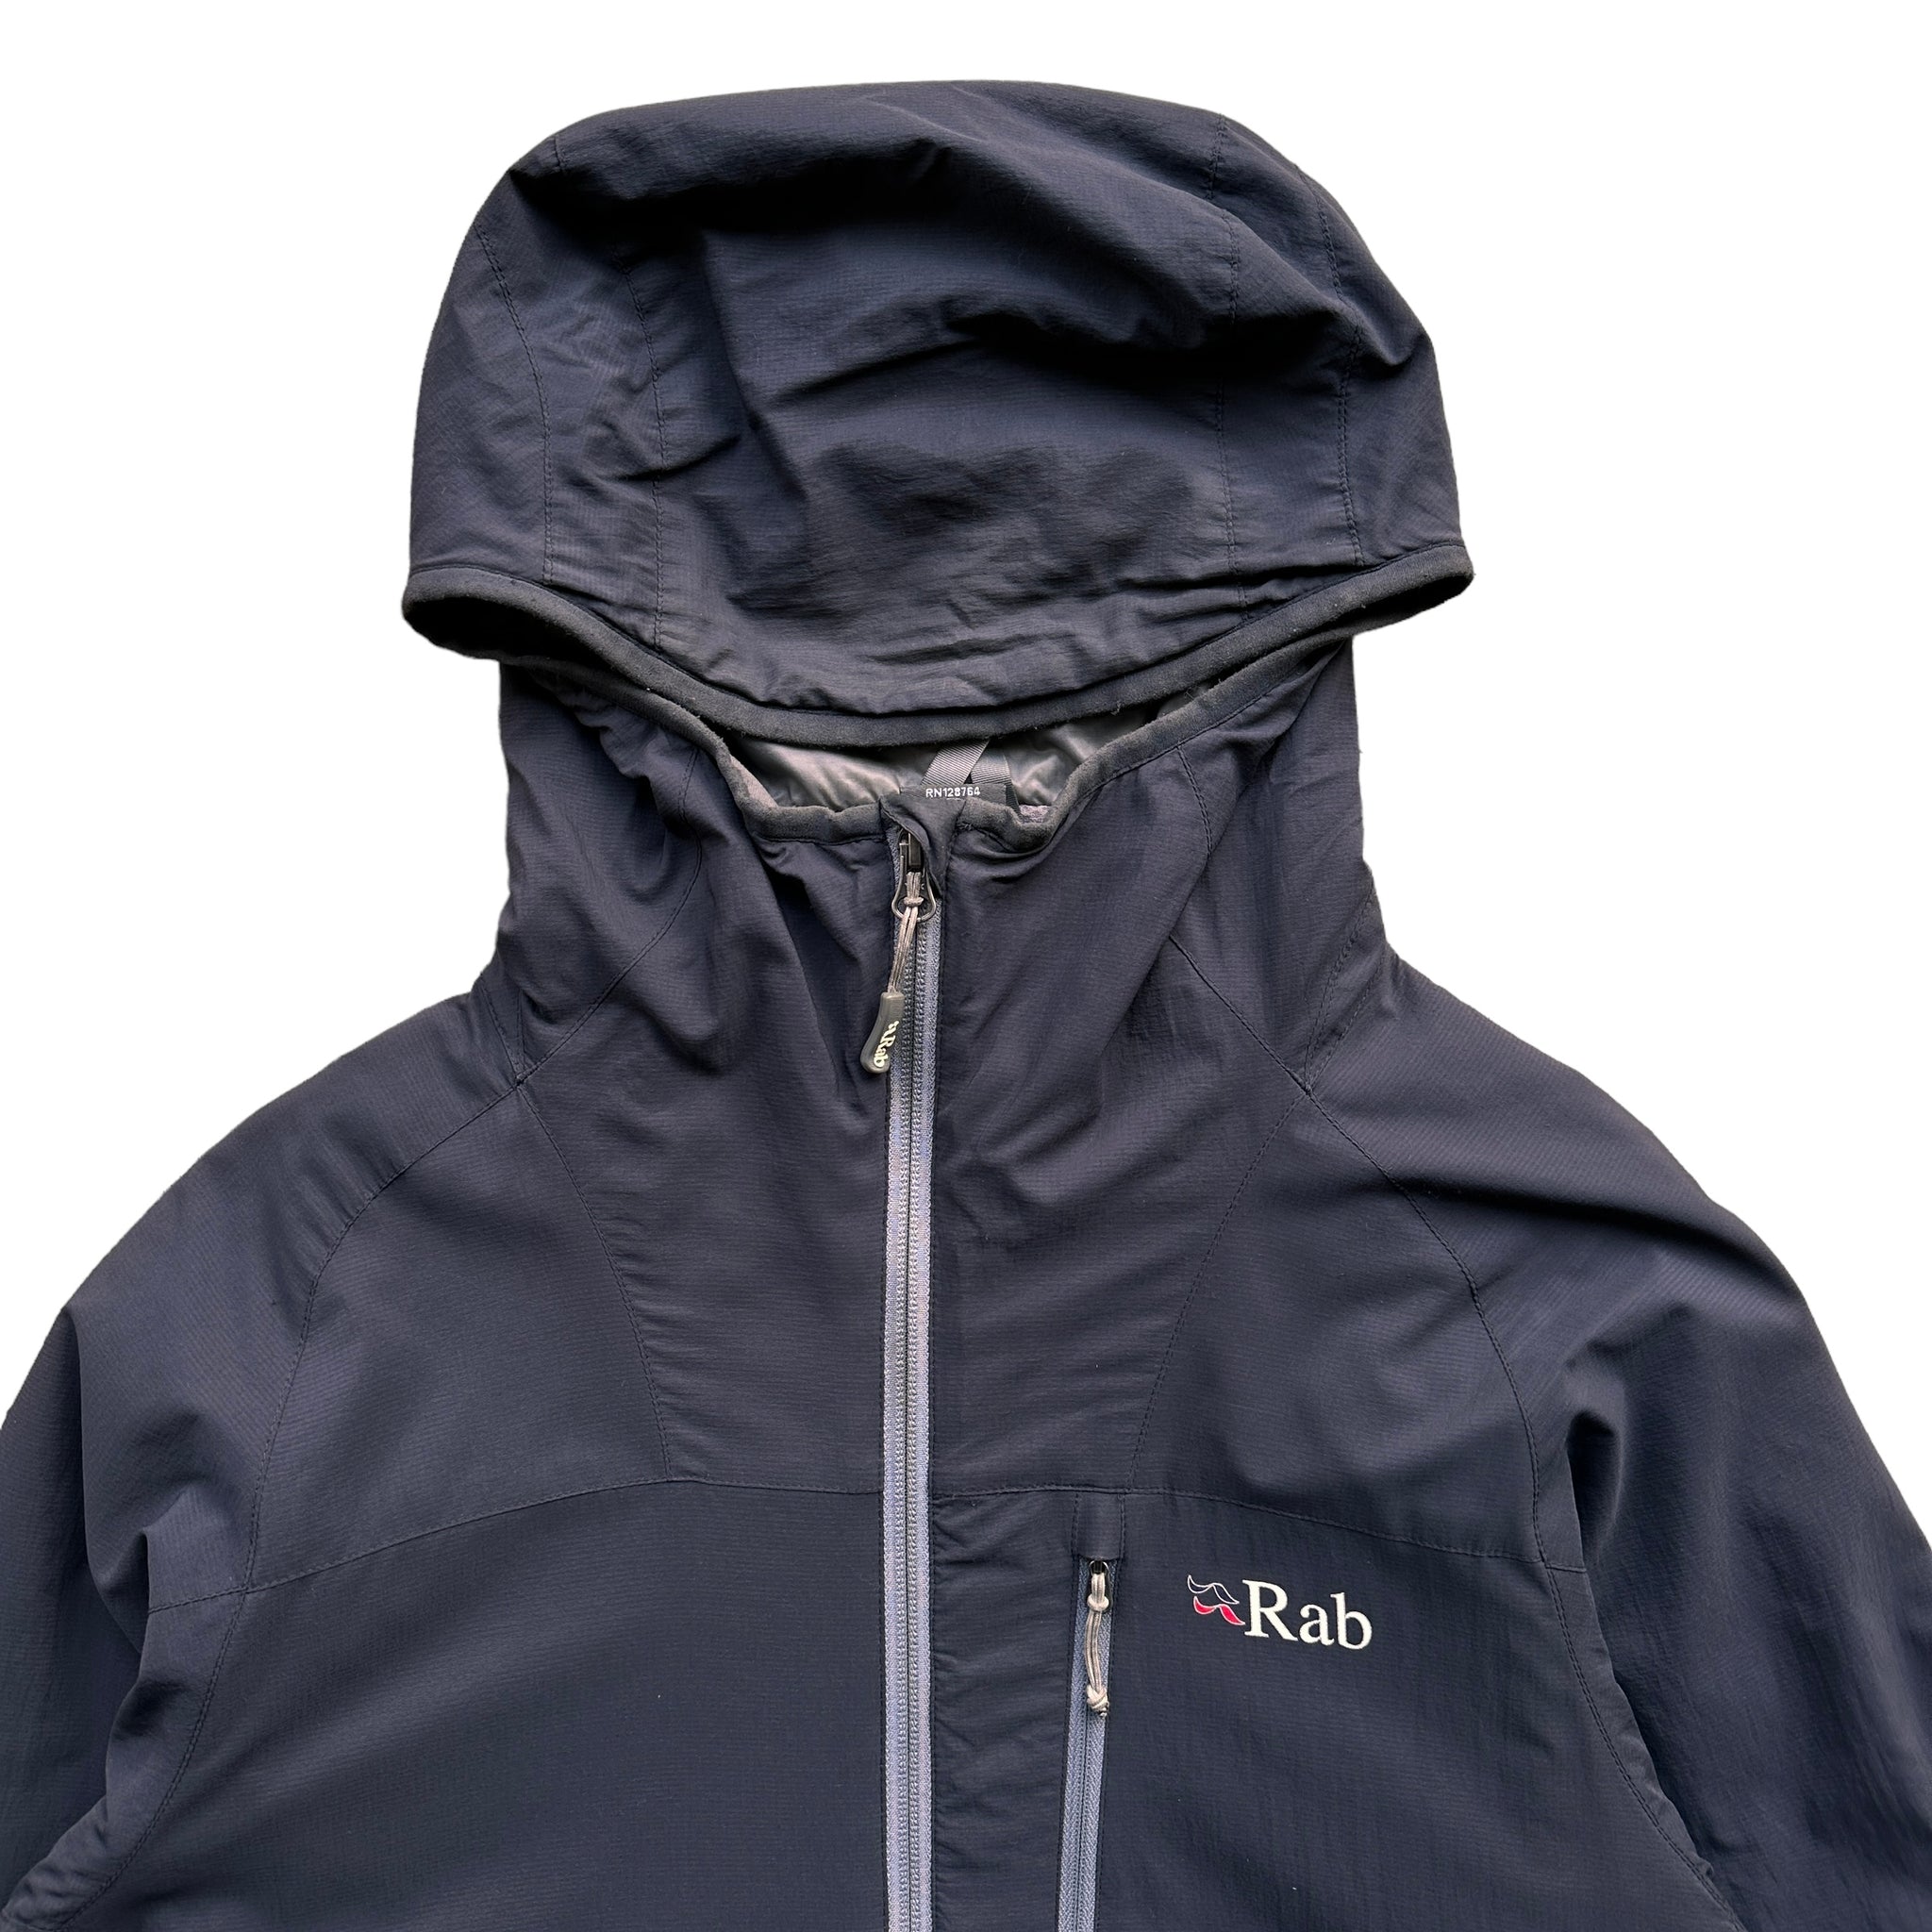 Rab Lightweight hooded jacket Small